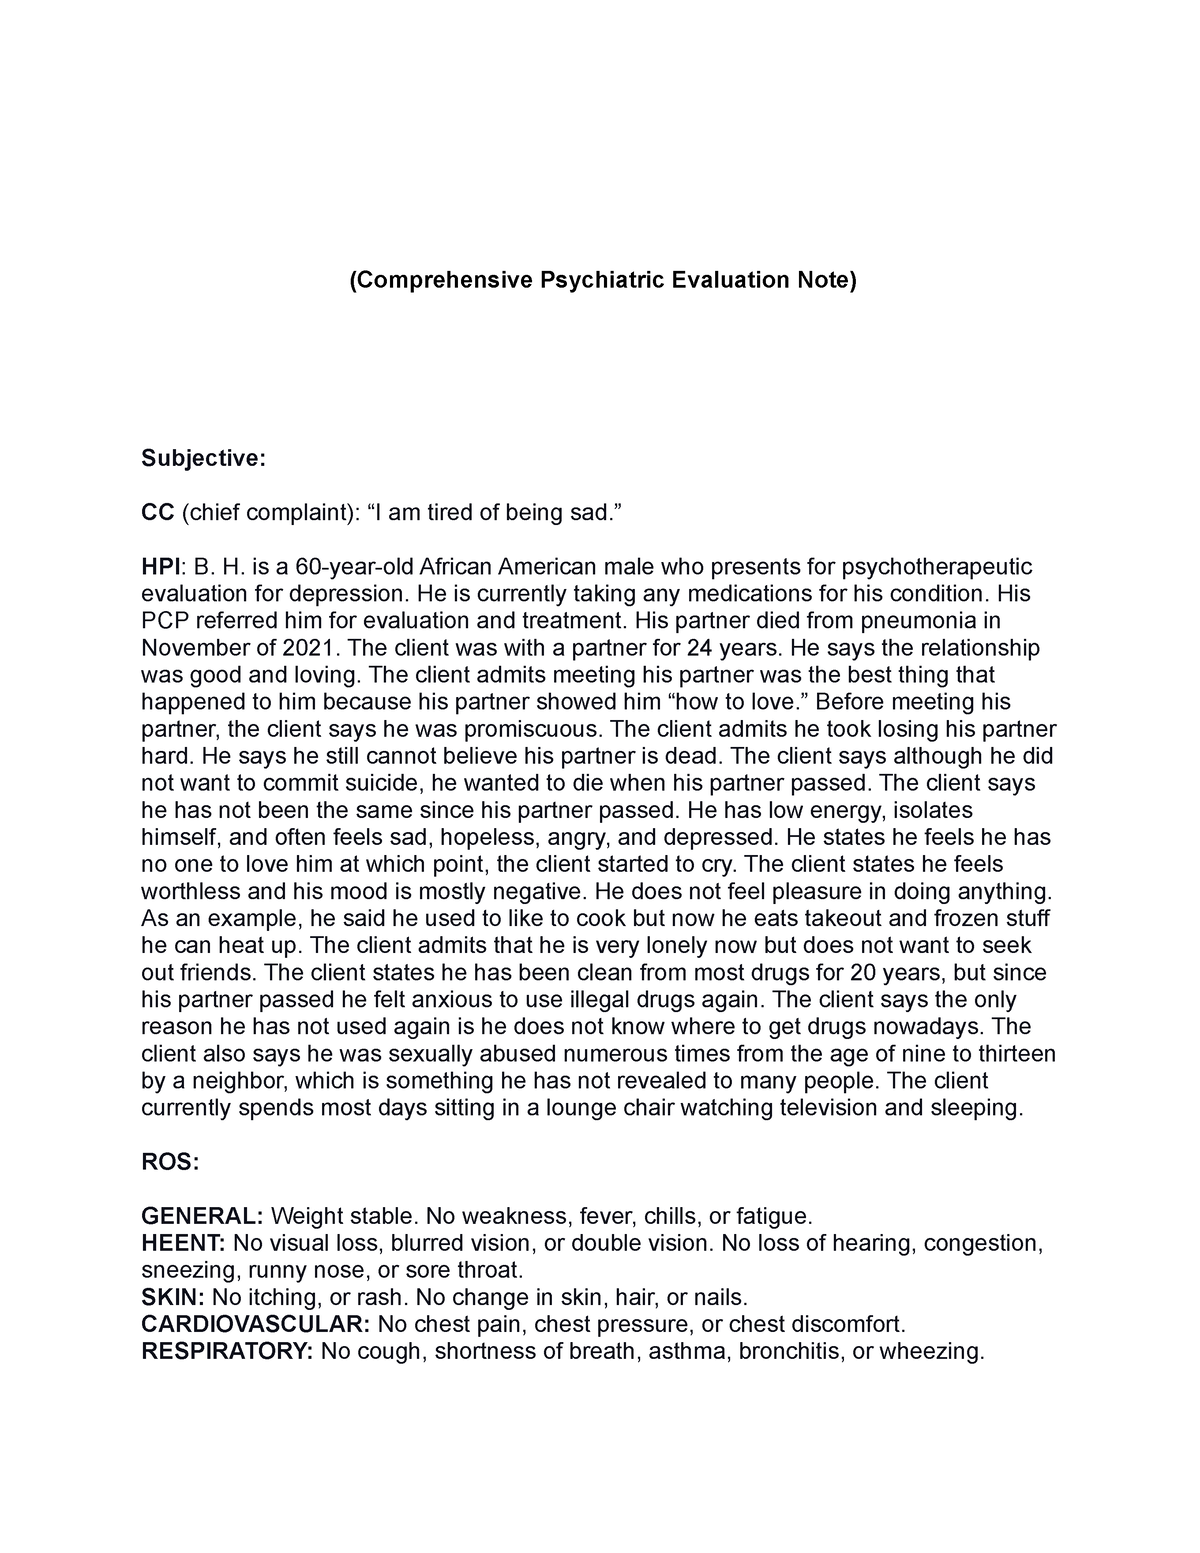 Comprehensive Psychiatric Evaluation Note - (Comprehensive Psychiatric ...